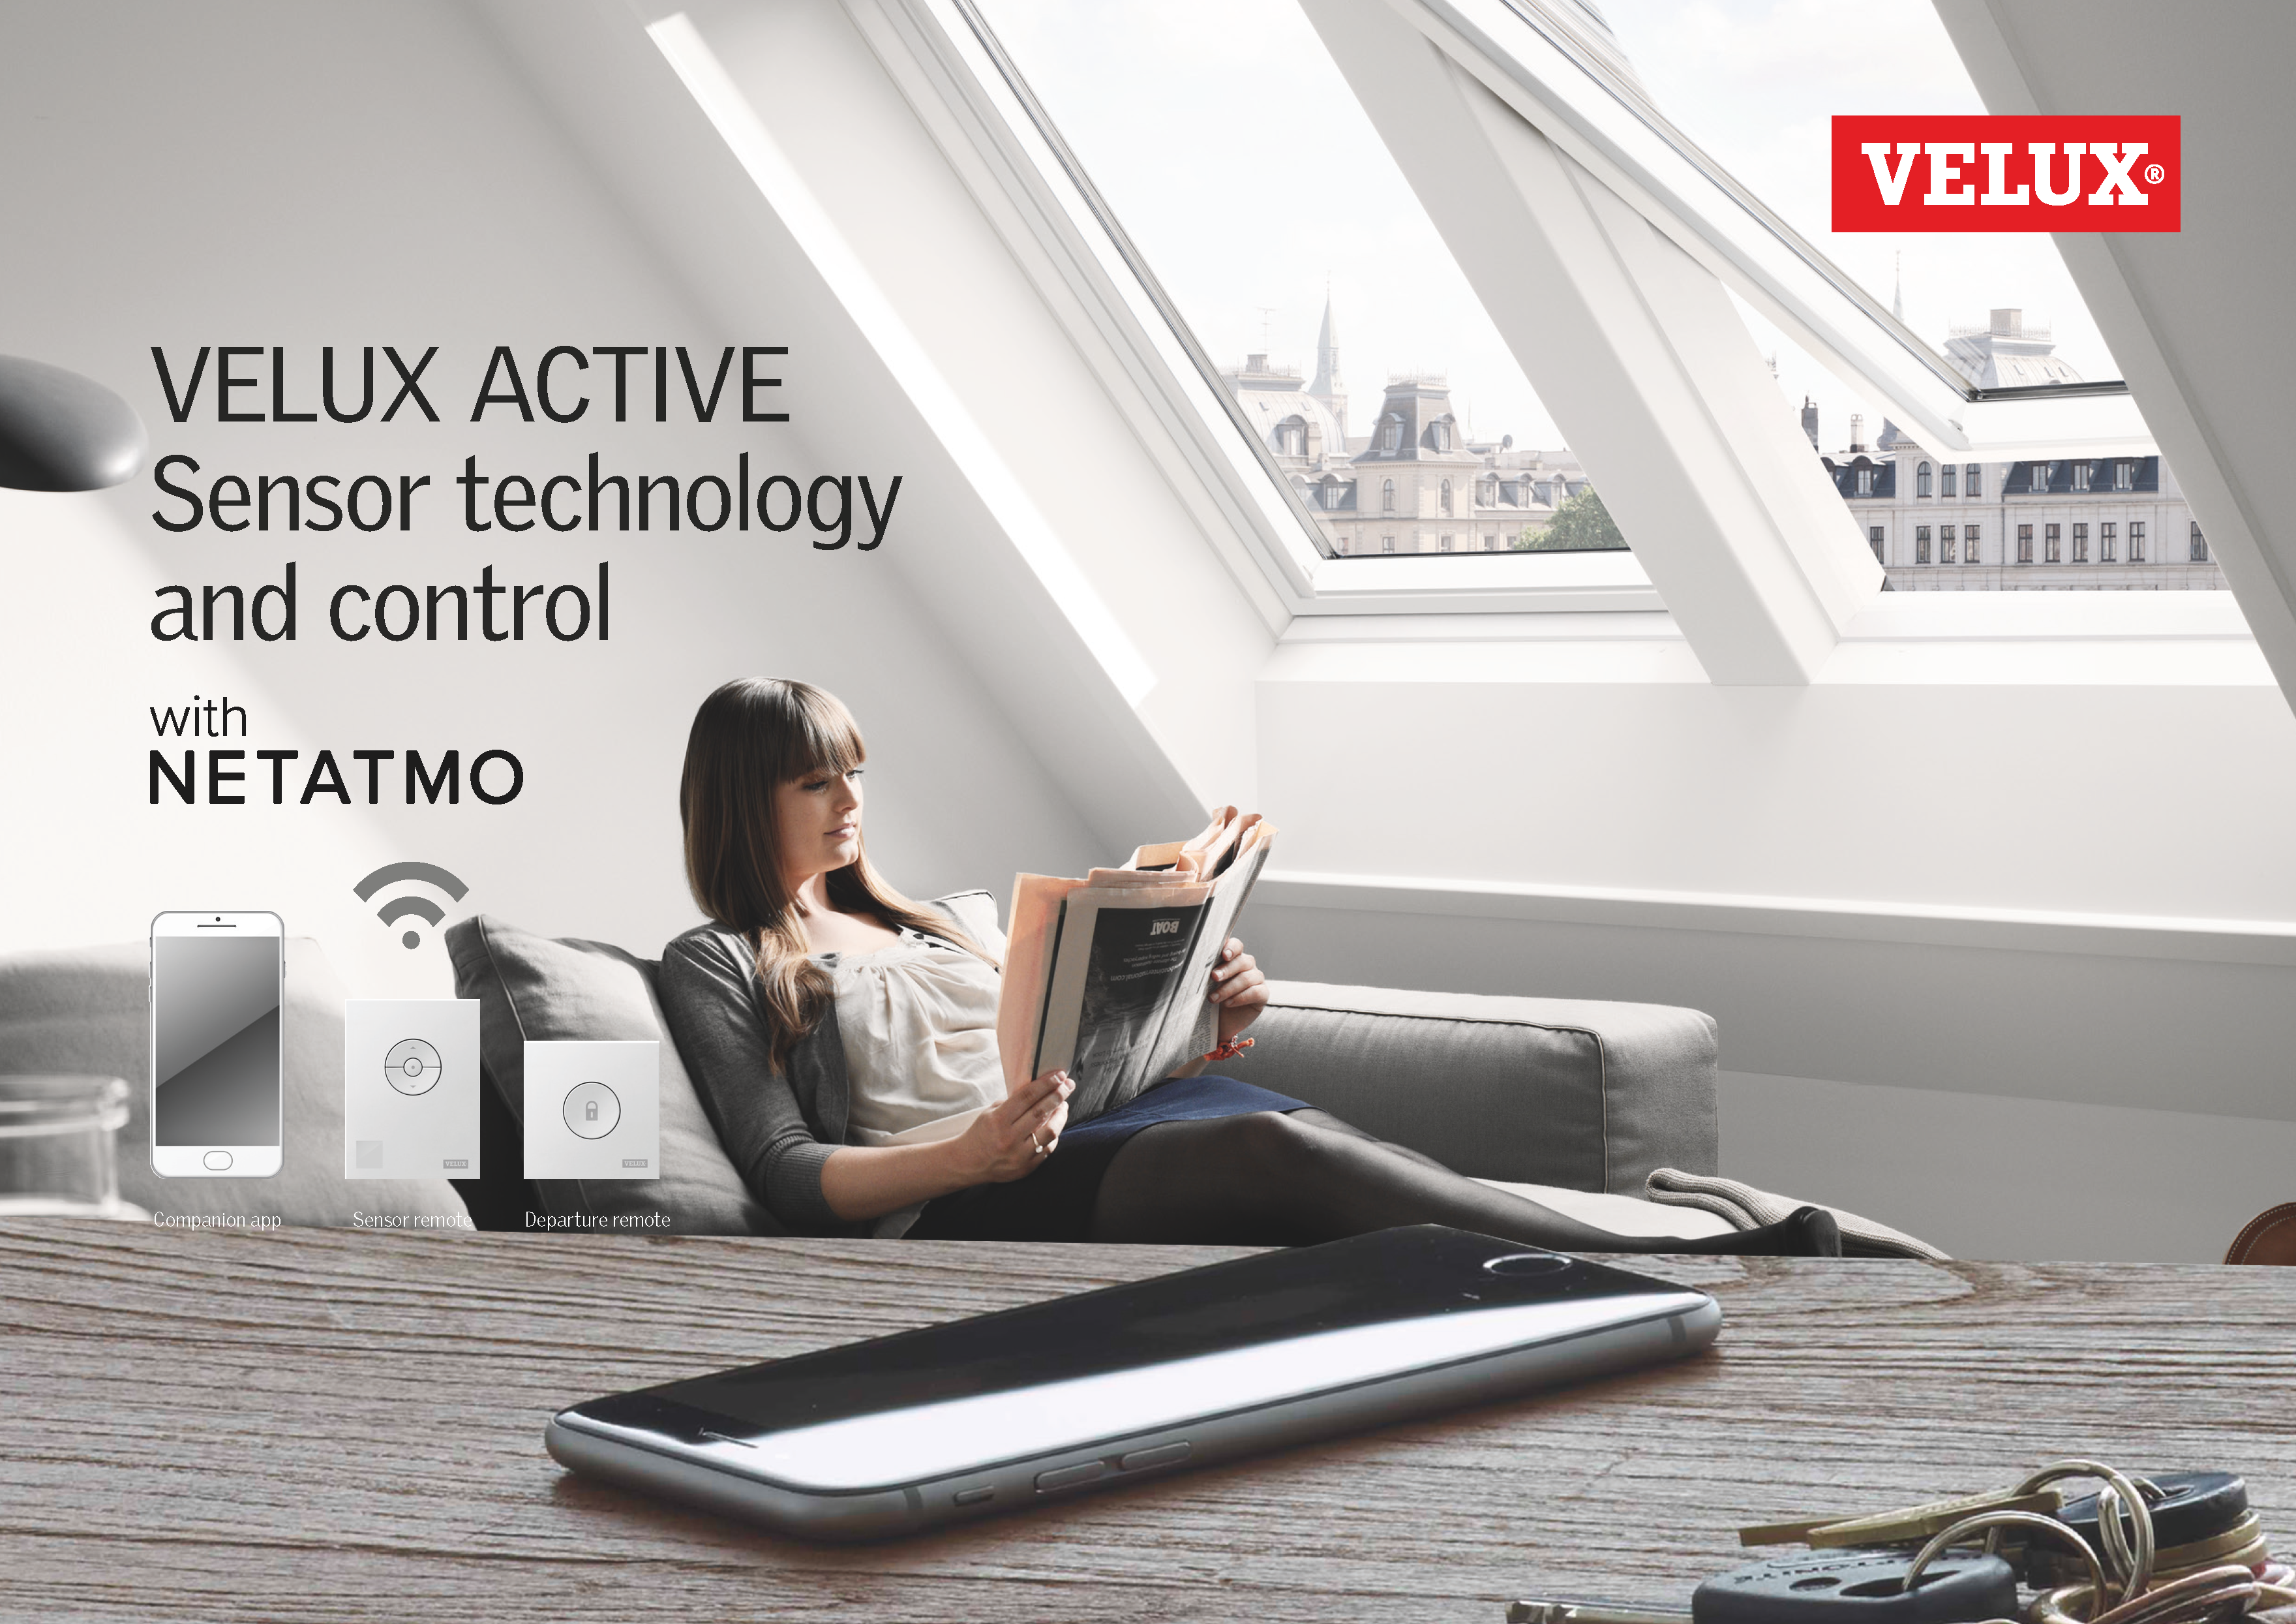 Velux Seals 'Smart Home' Partnership with Netatmo